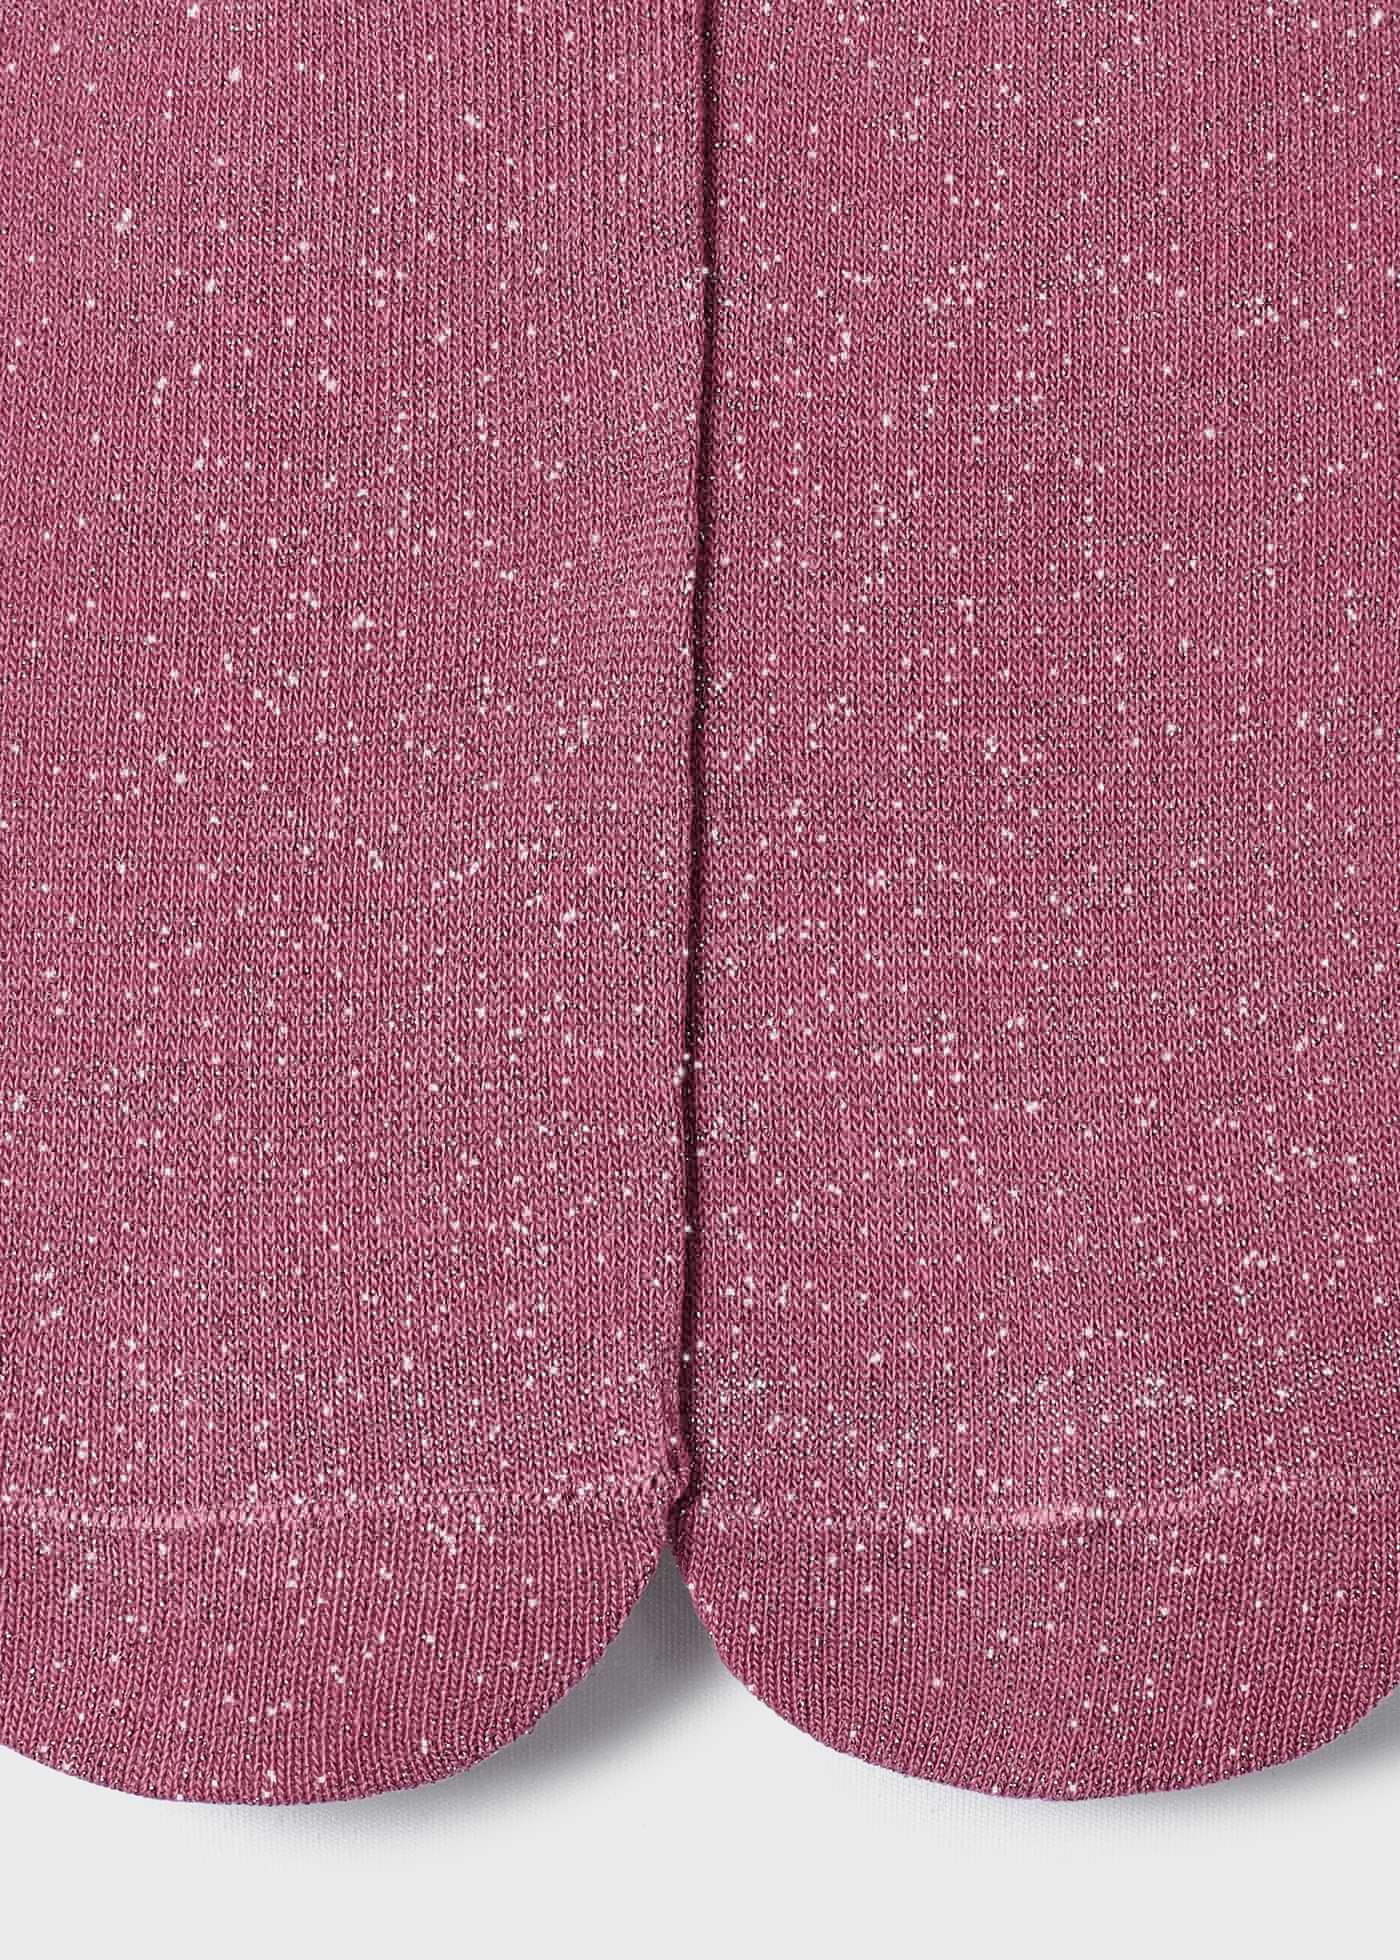 Girl tights with metallic thread